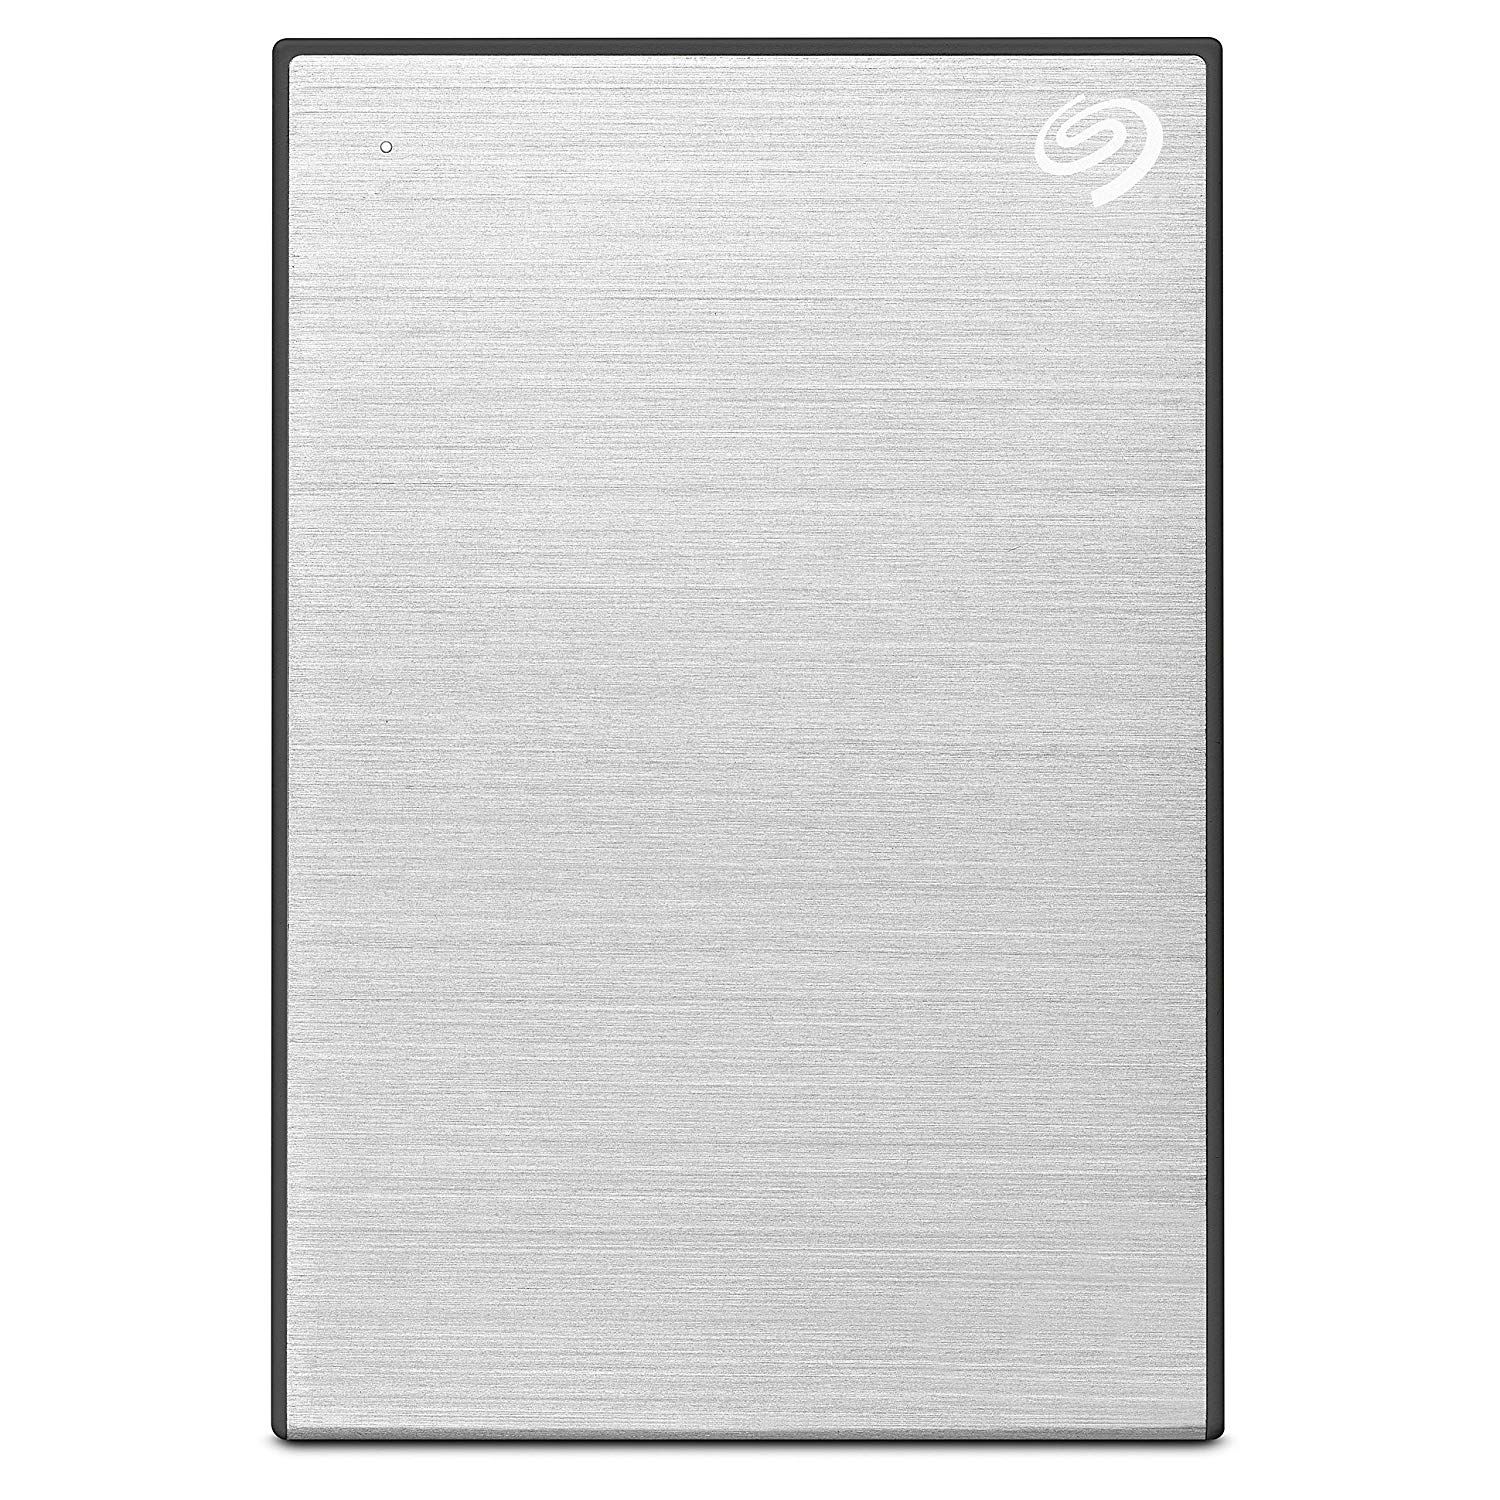     			Seagate 1TB Backup Plus Slim Portable External Hard Drive  (Silver)